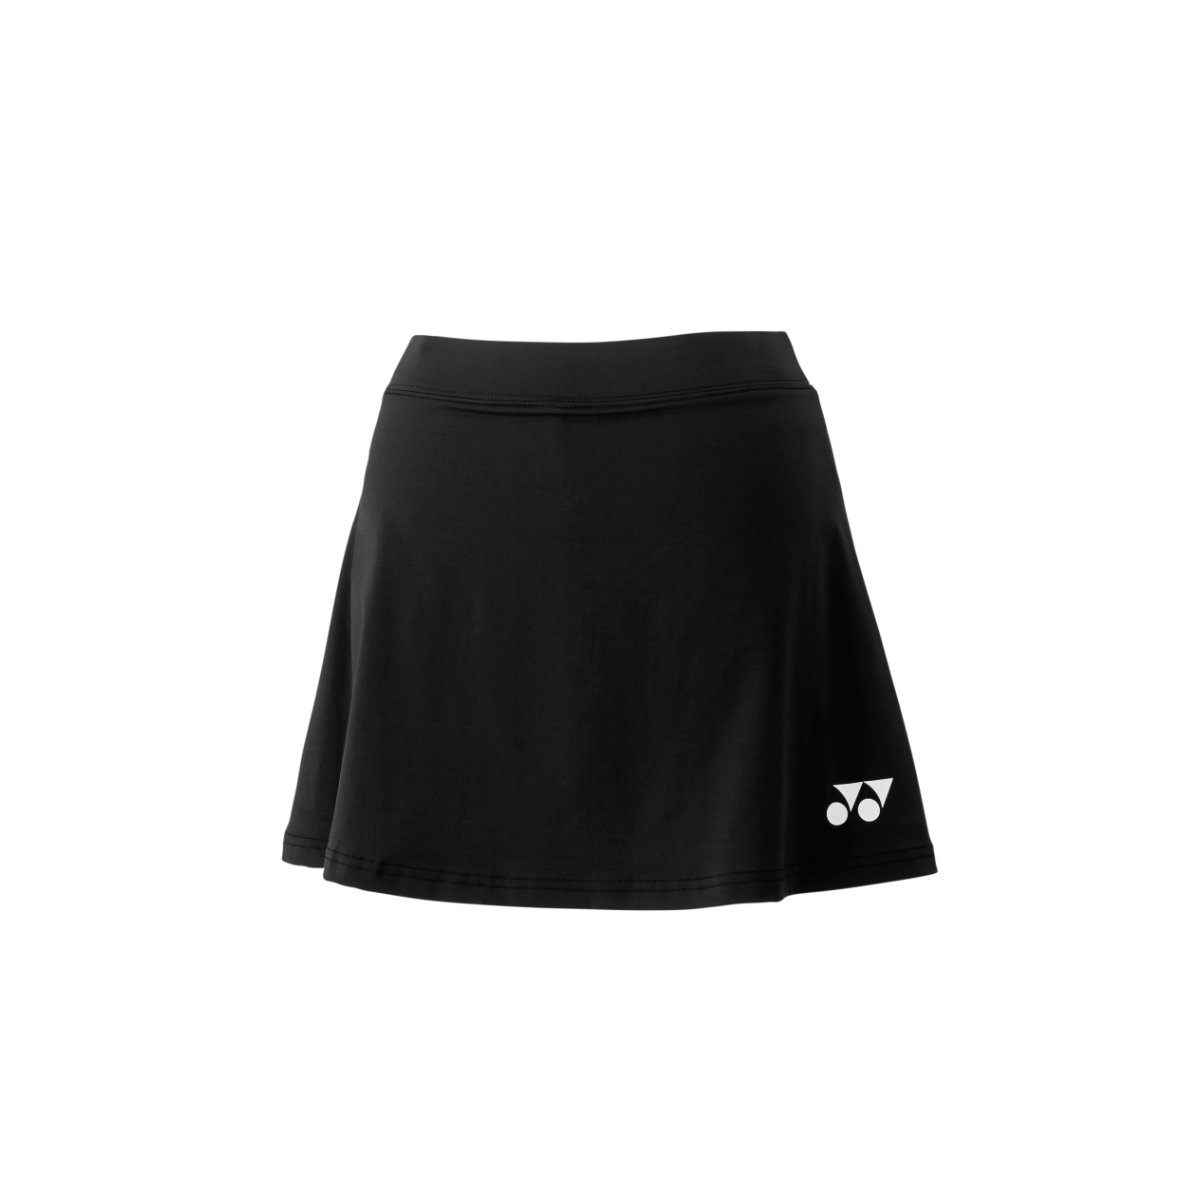 LADIES SKORT YW0030 Black (with inner Shorts)